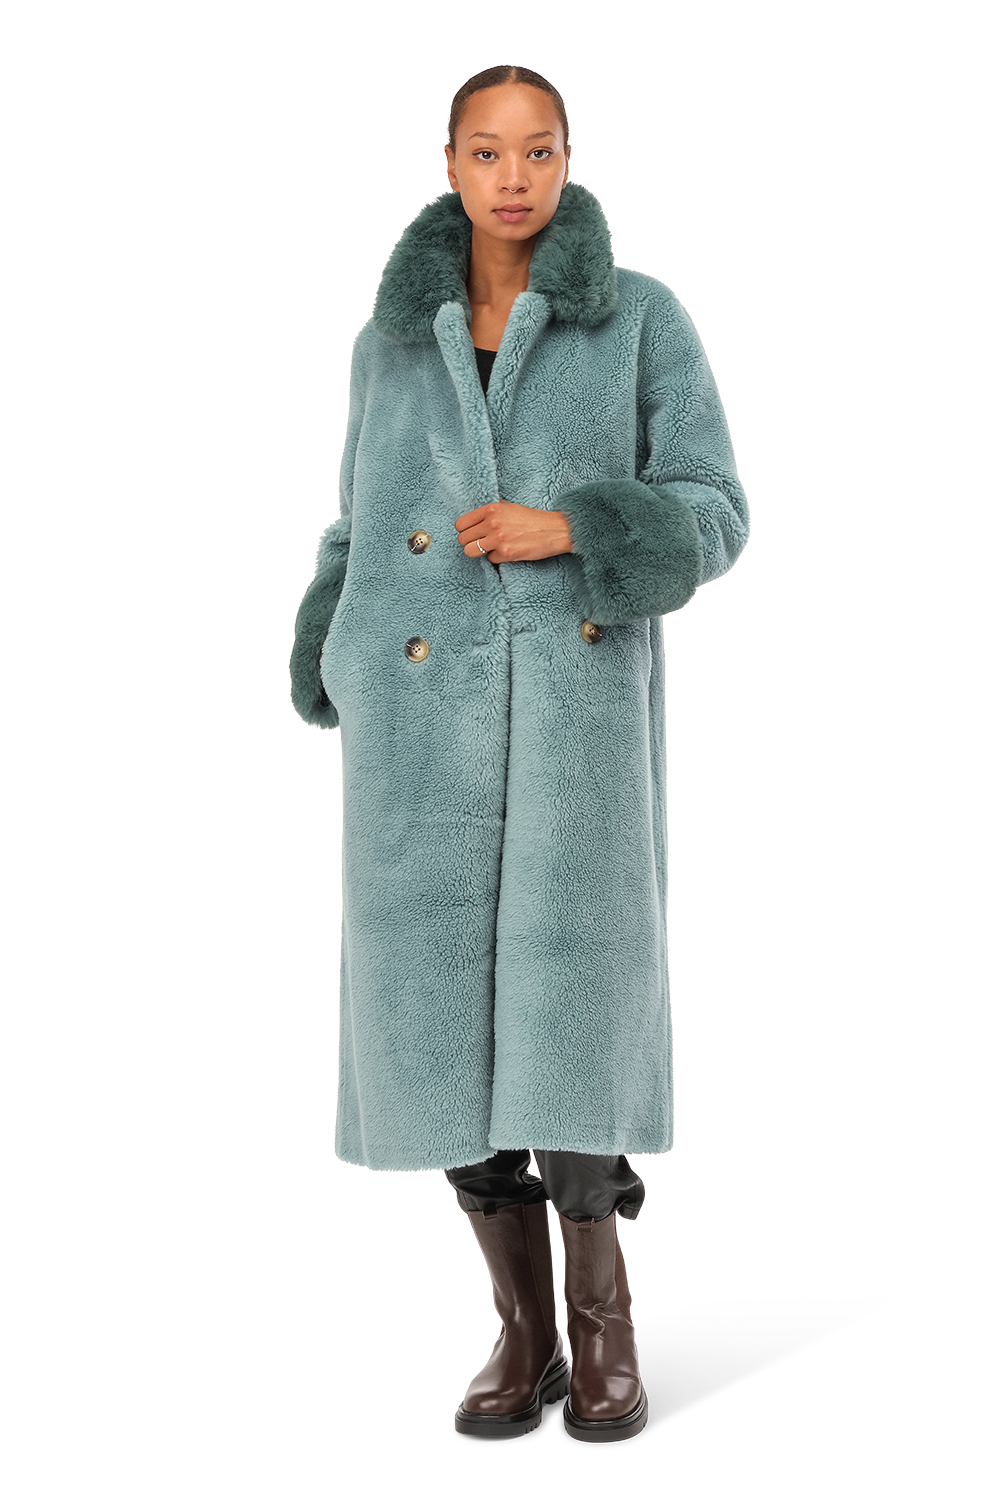 Fiona Long Wool Coat Turquoise